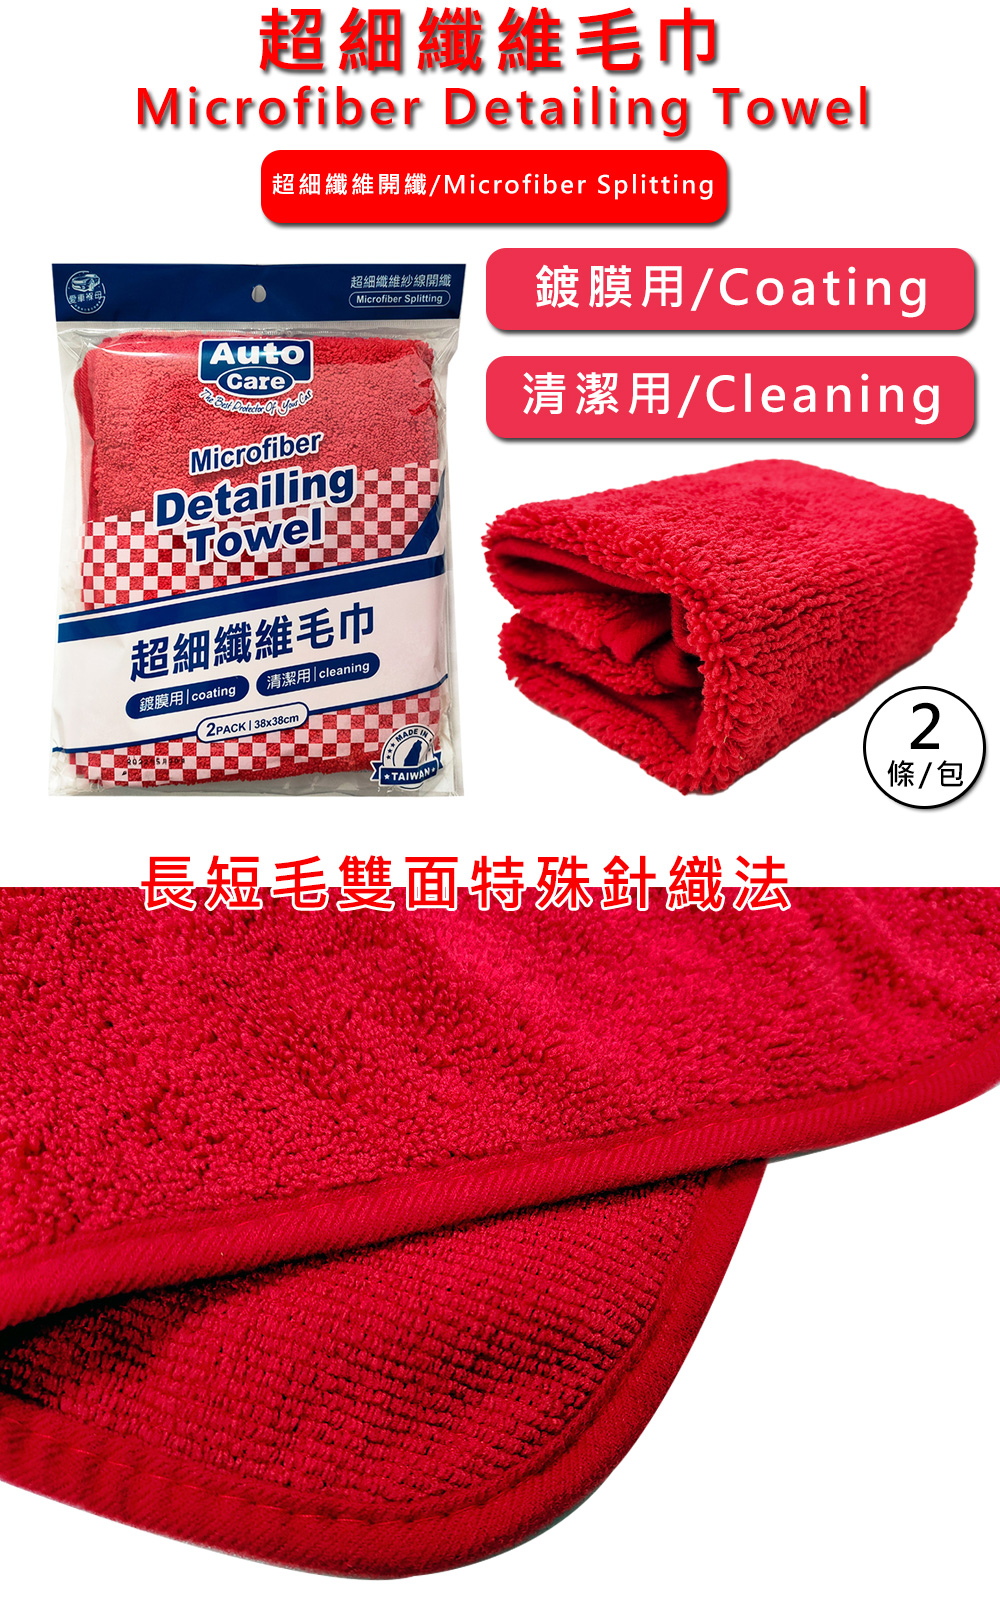 Microfiber Detailing Towel Wֺy